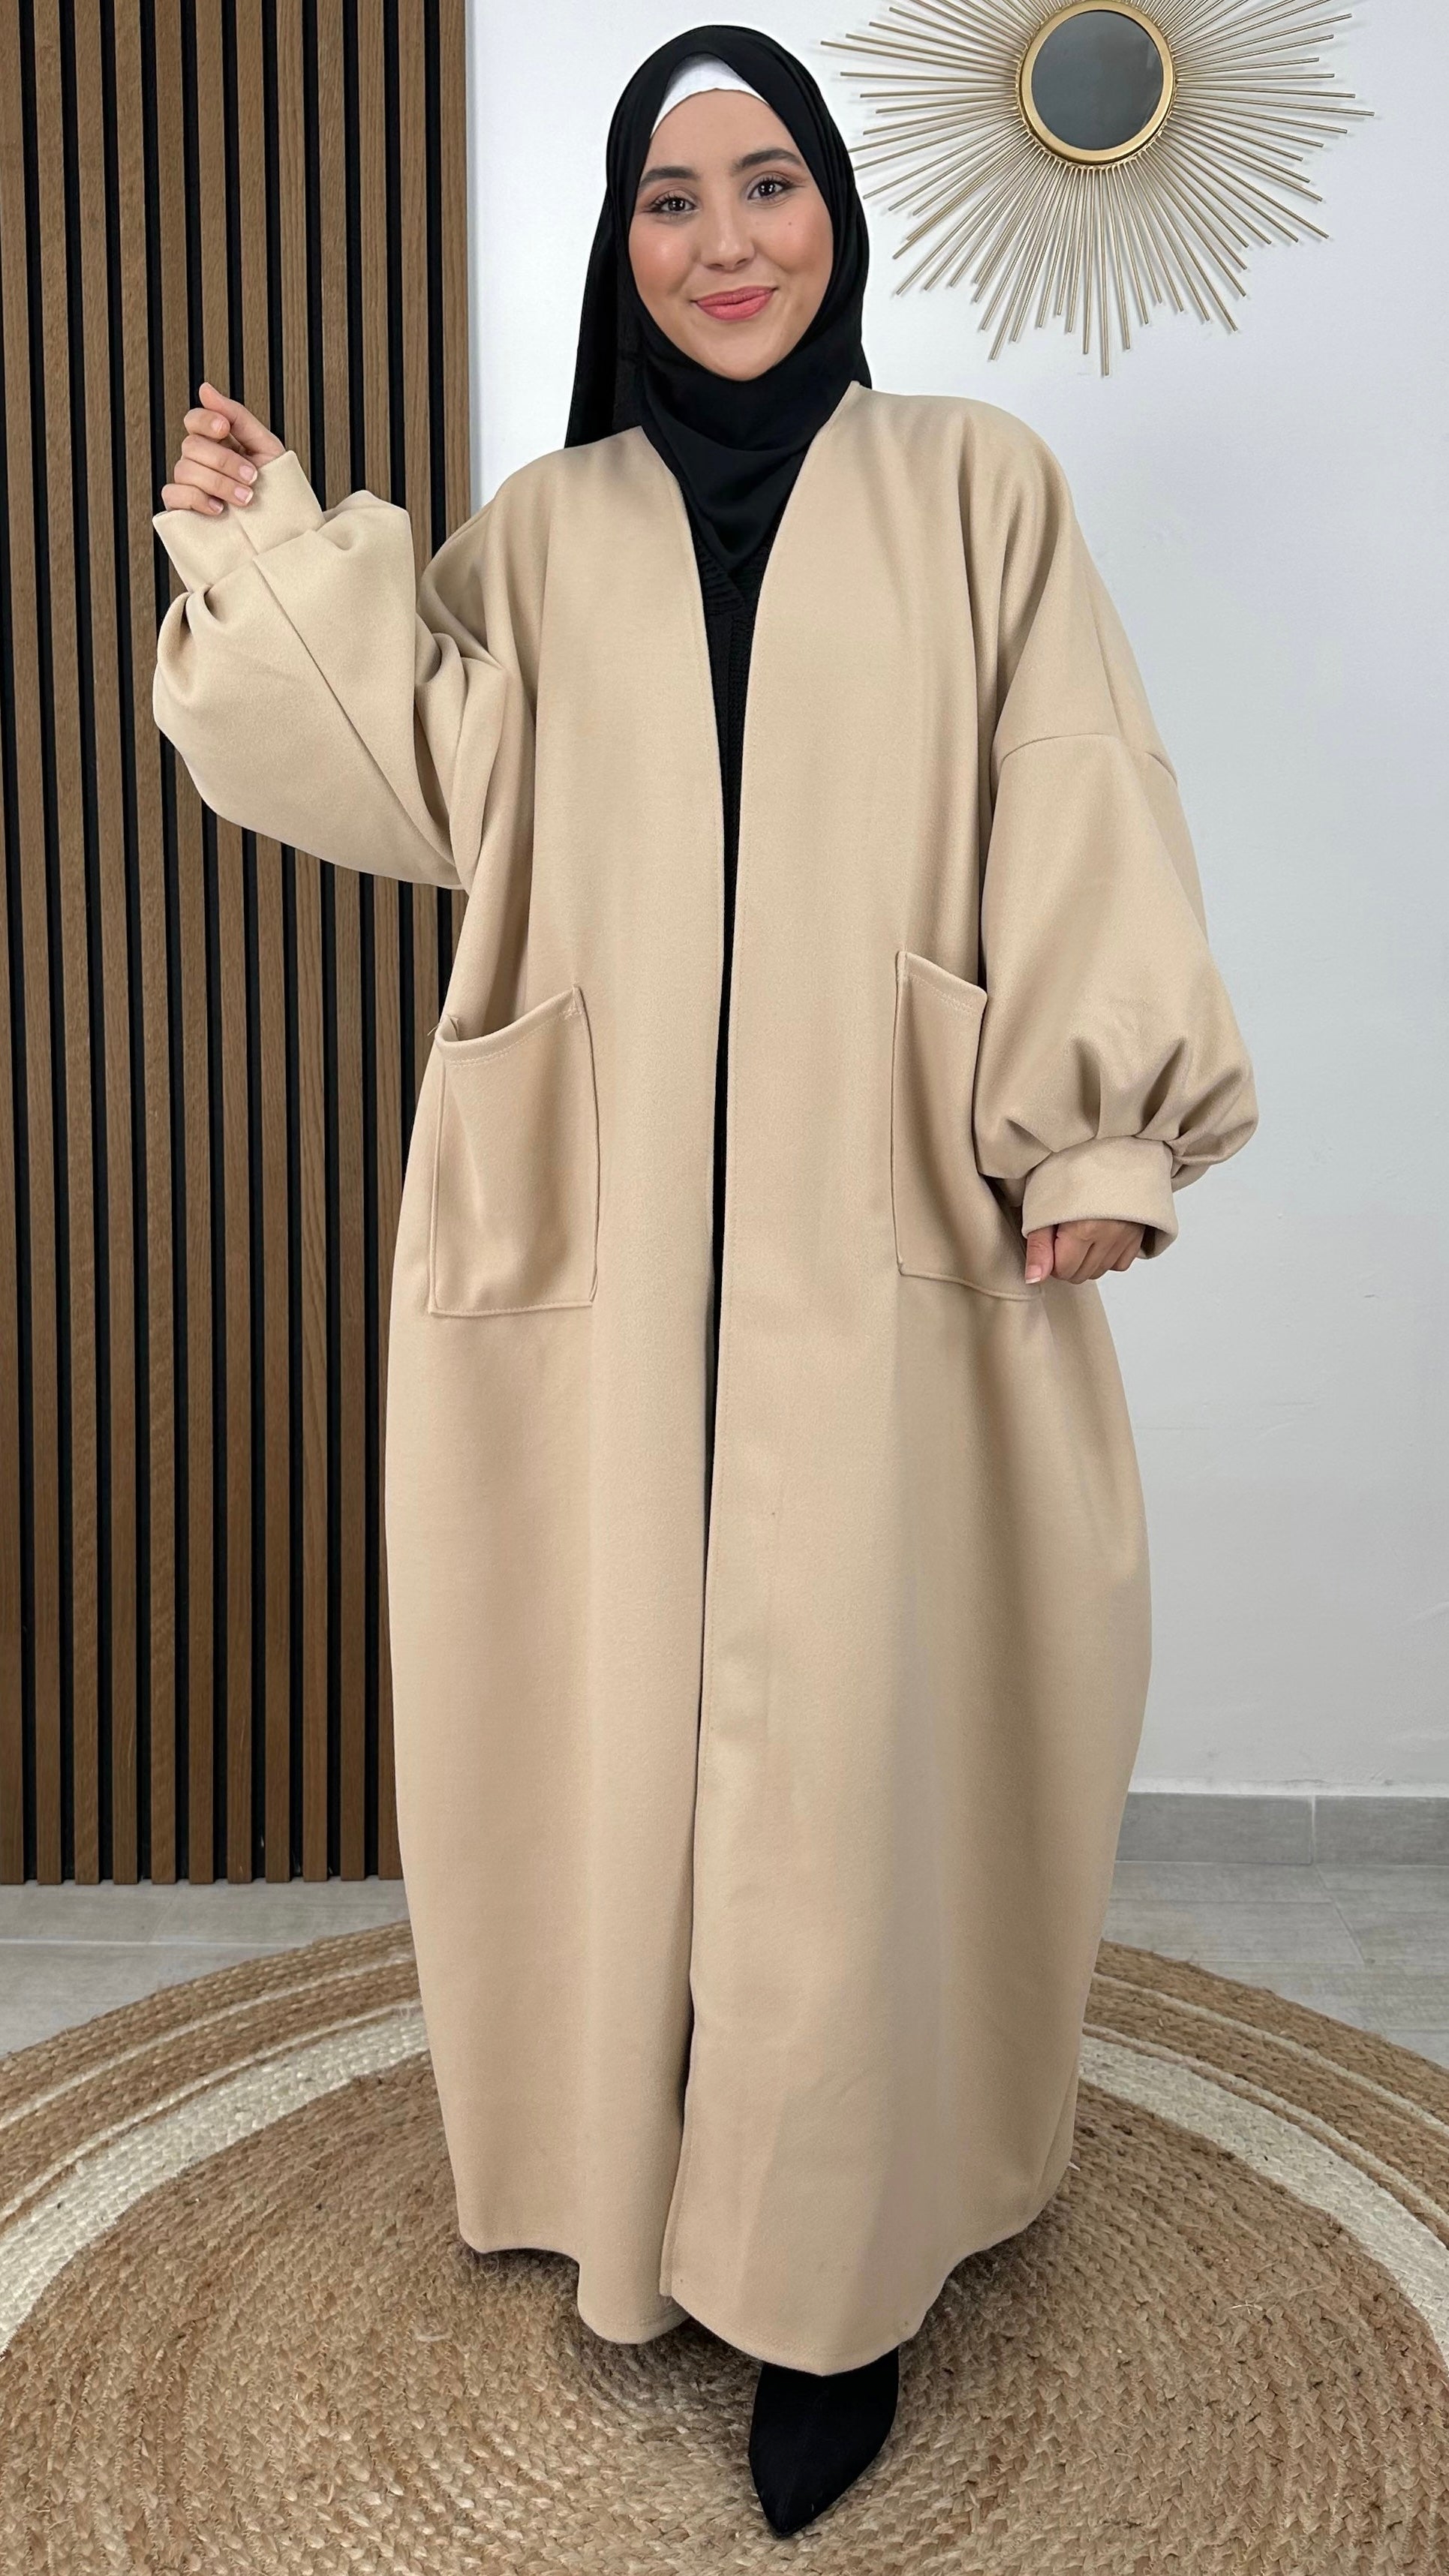 Cappotto Coat Manica a Sbuffo Beige -hijab paradise-donna musulmana - donna - hijab - tasche - maniche larghe 